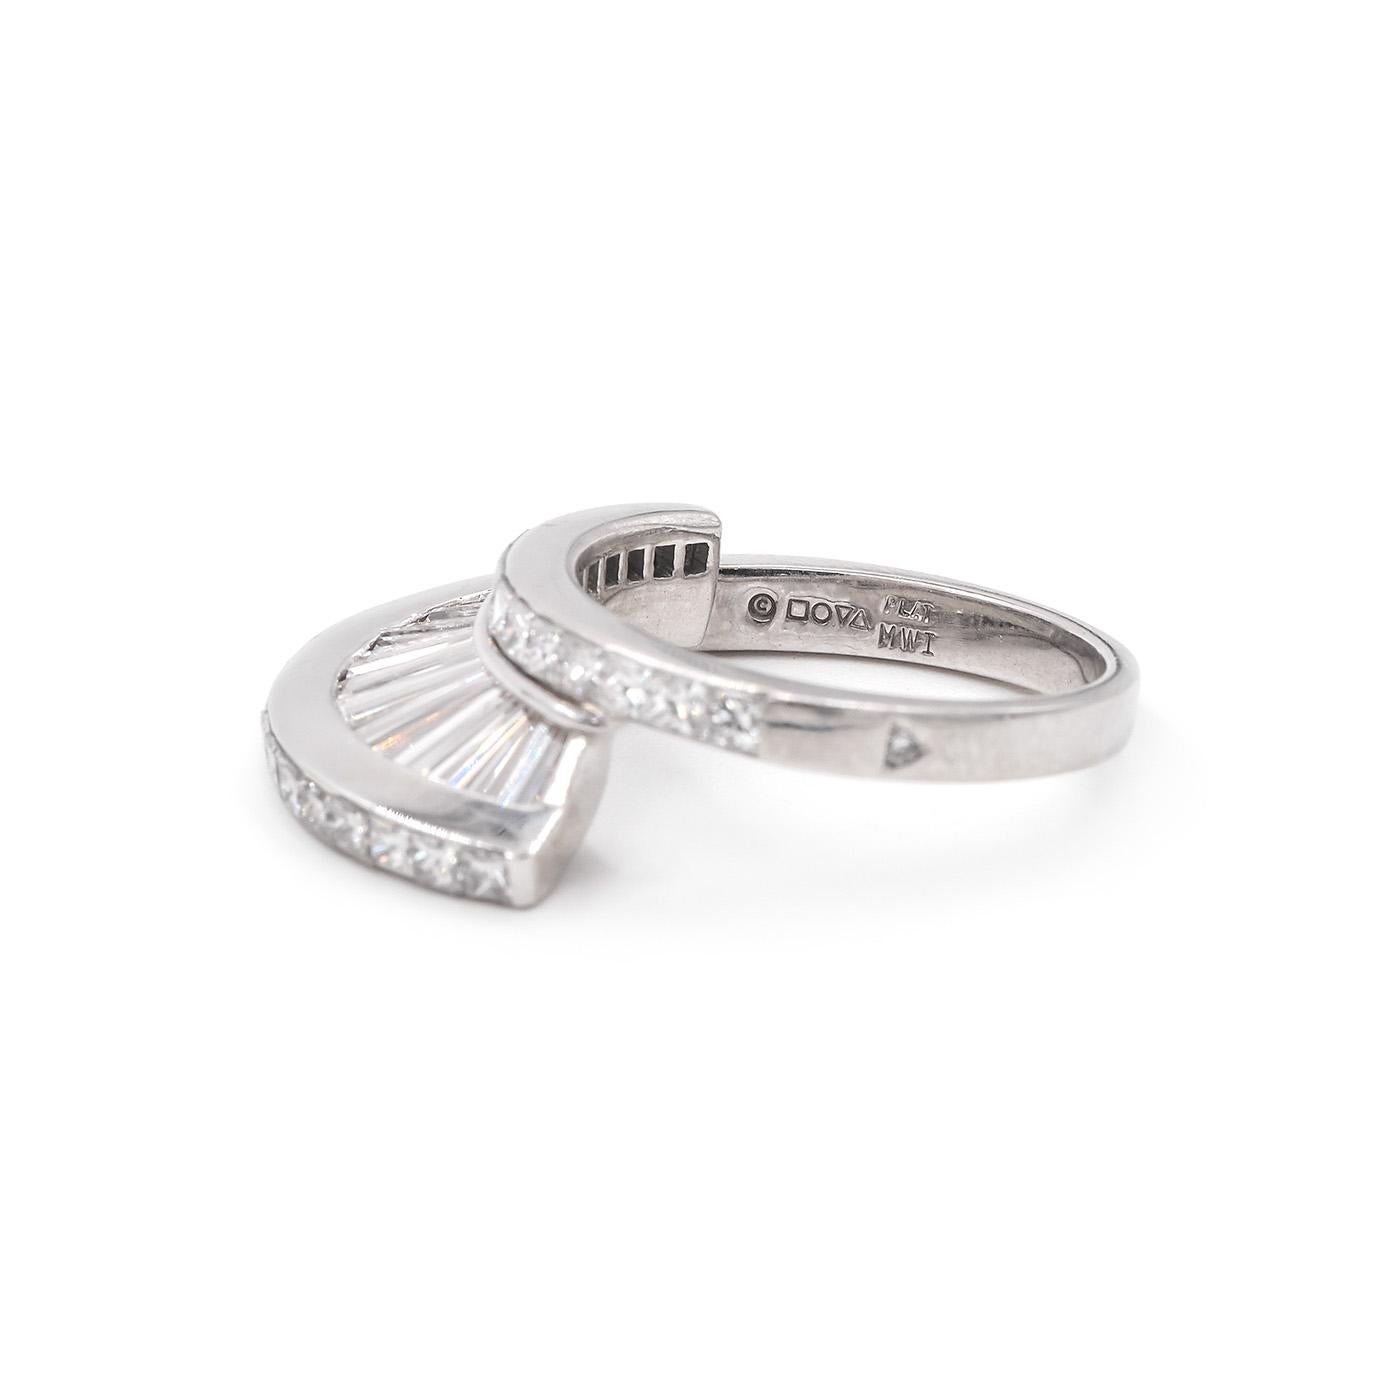 Modern Vintage Baguette Cut & Princess Cut Diamond 'Fan' Ring Set by MWI Eloquence For Sale